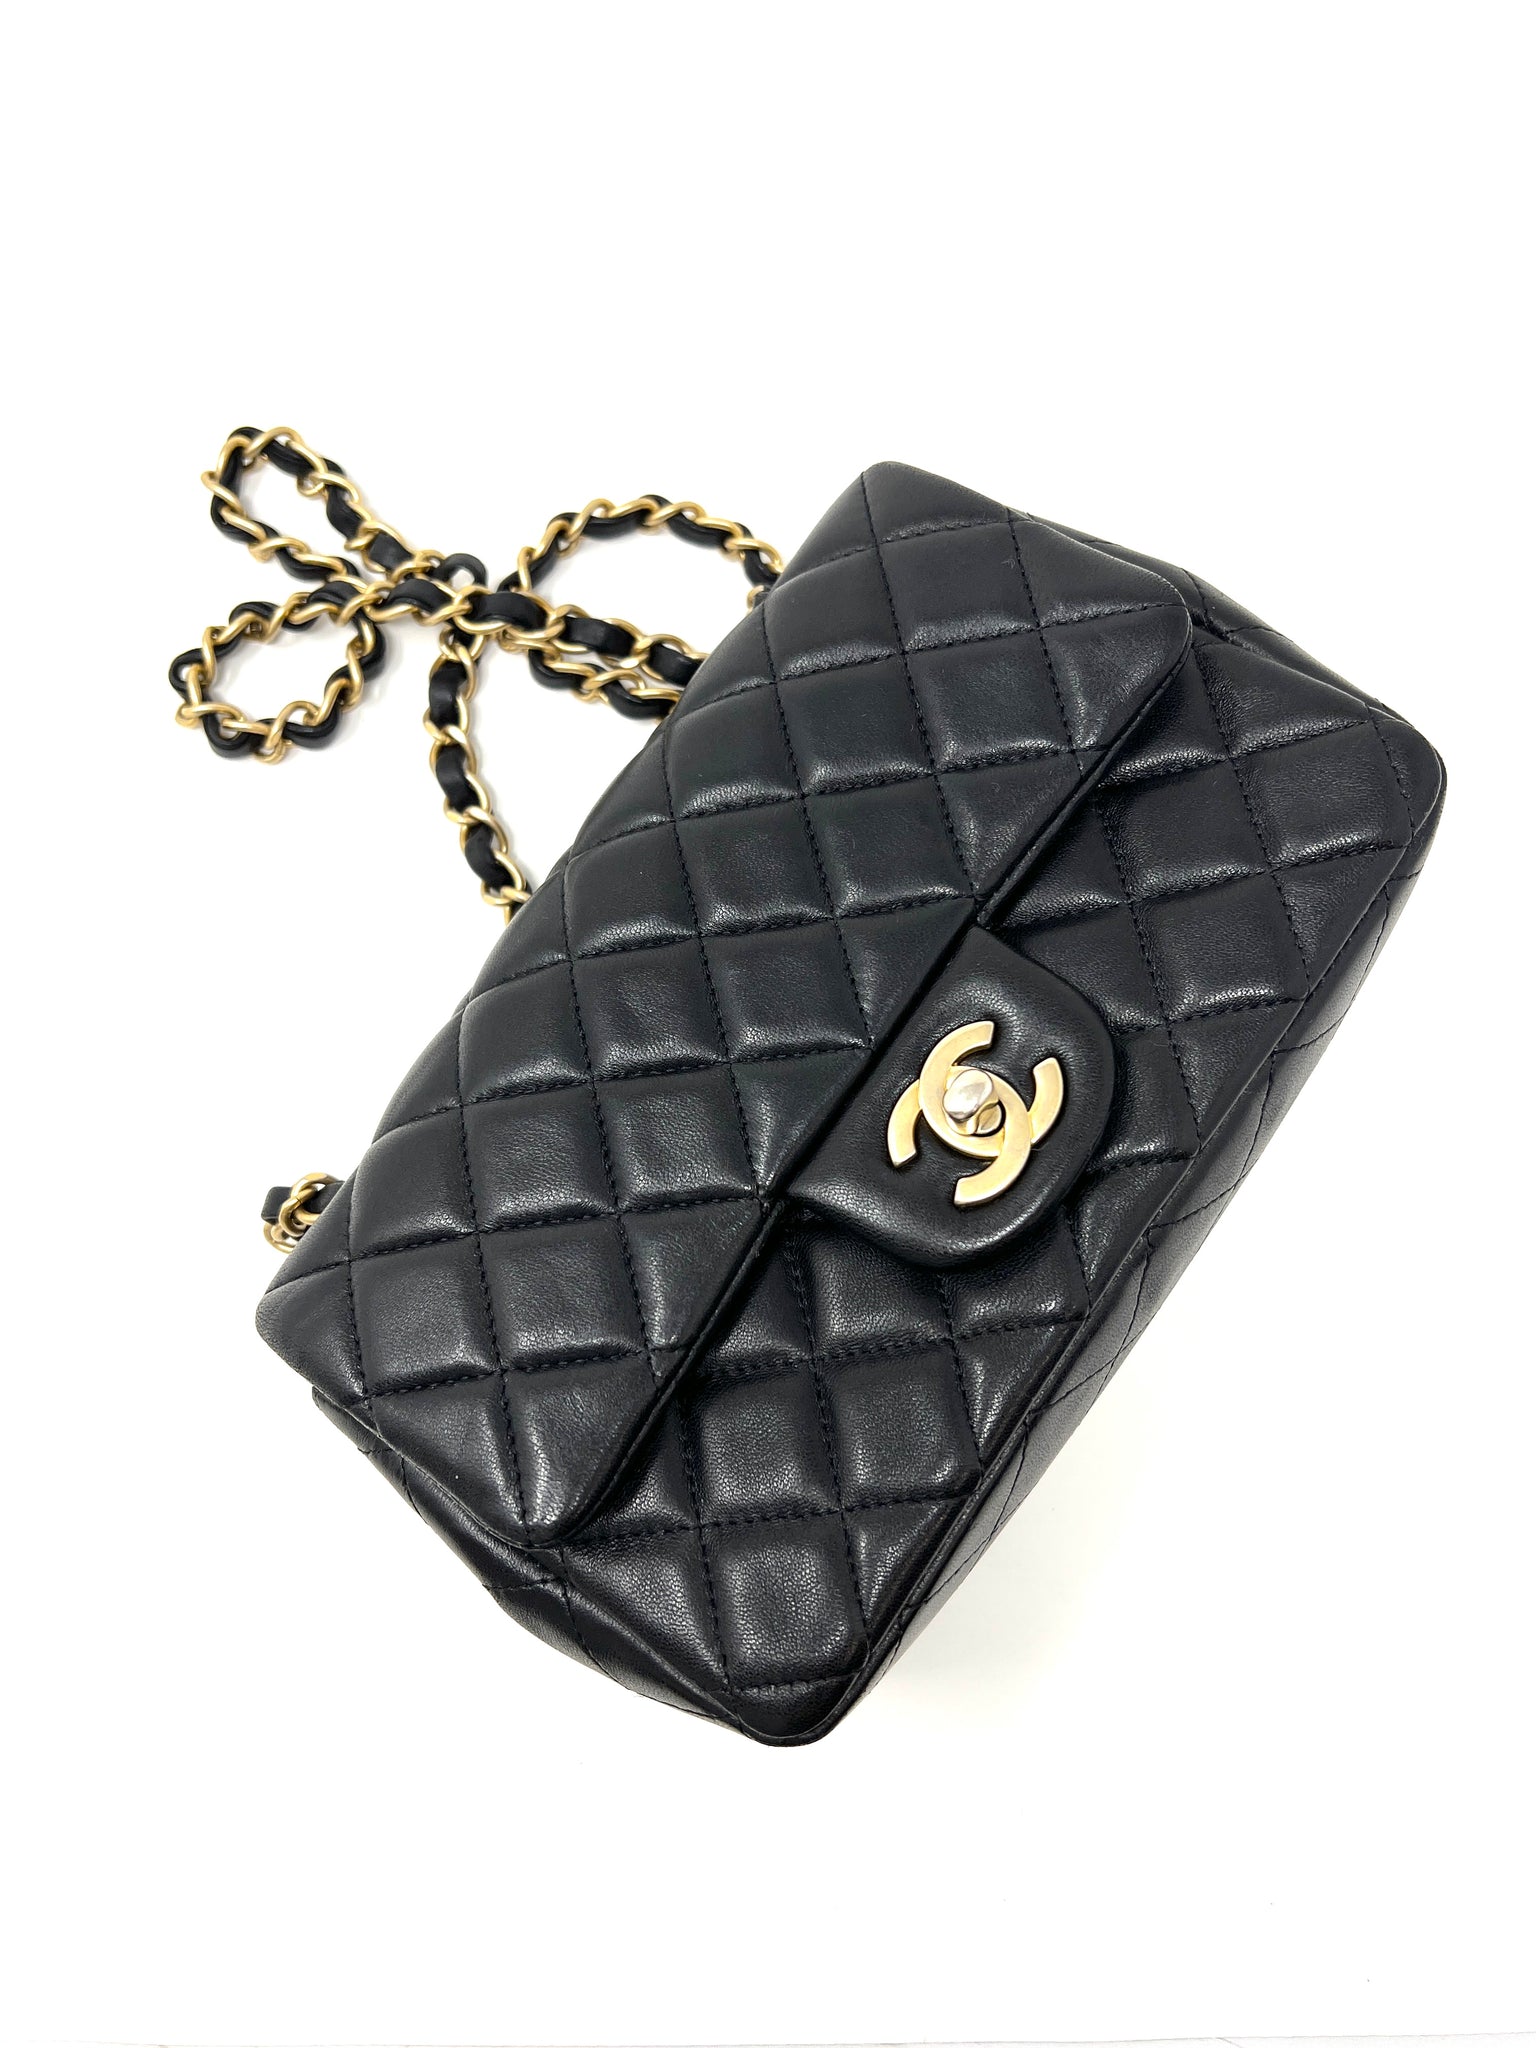 Black leather rectangular mini bag